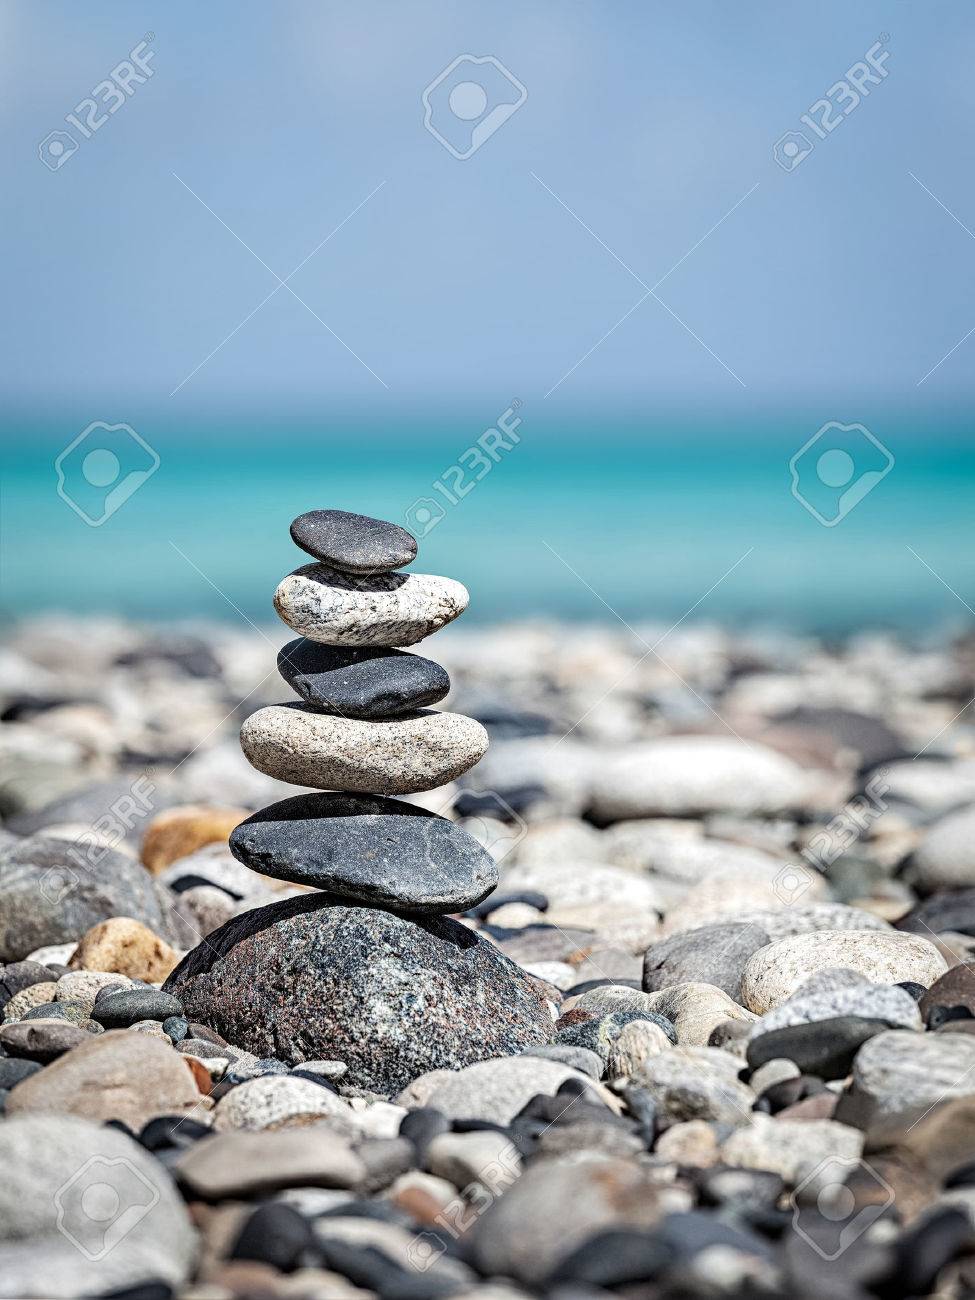 Zen Meditation Relaxation Concept Background Balanced Stones